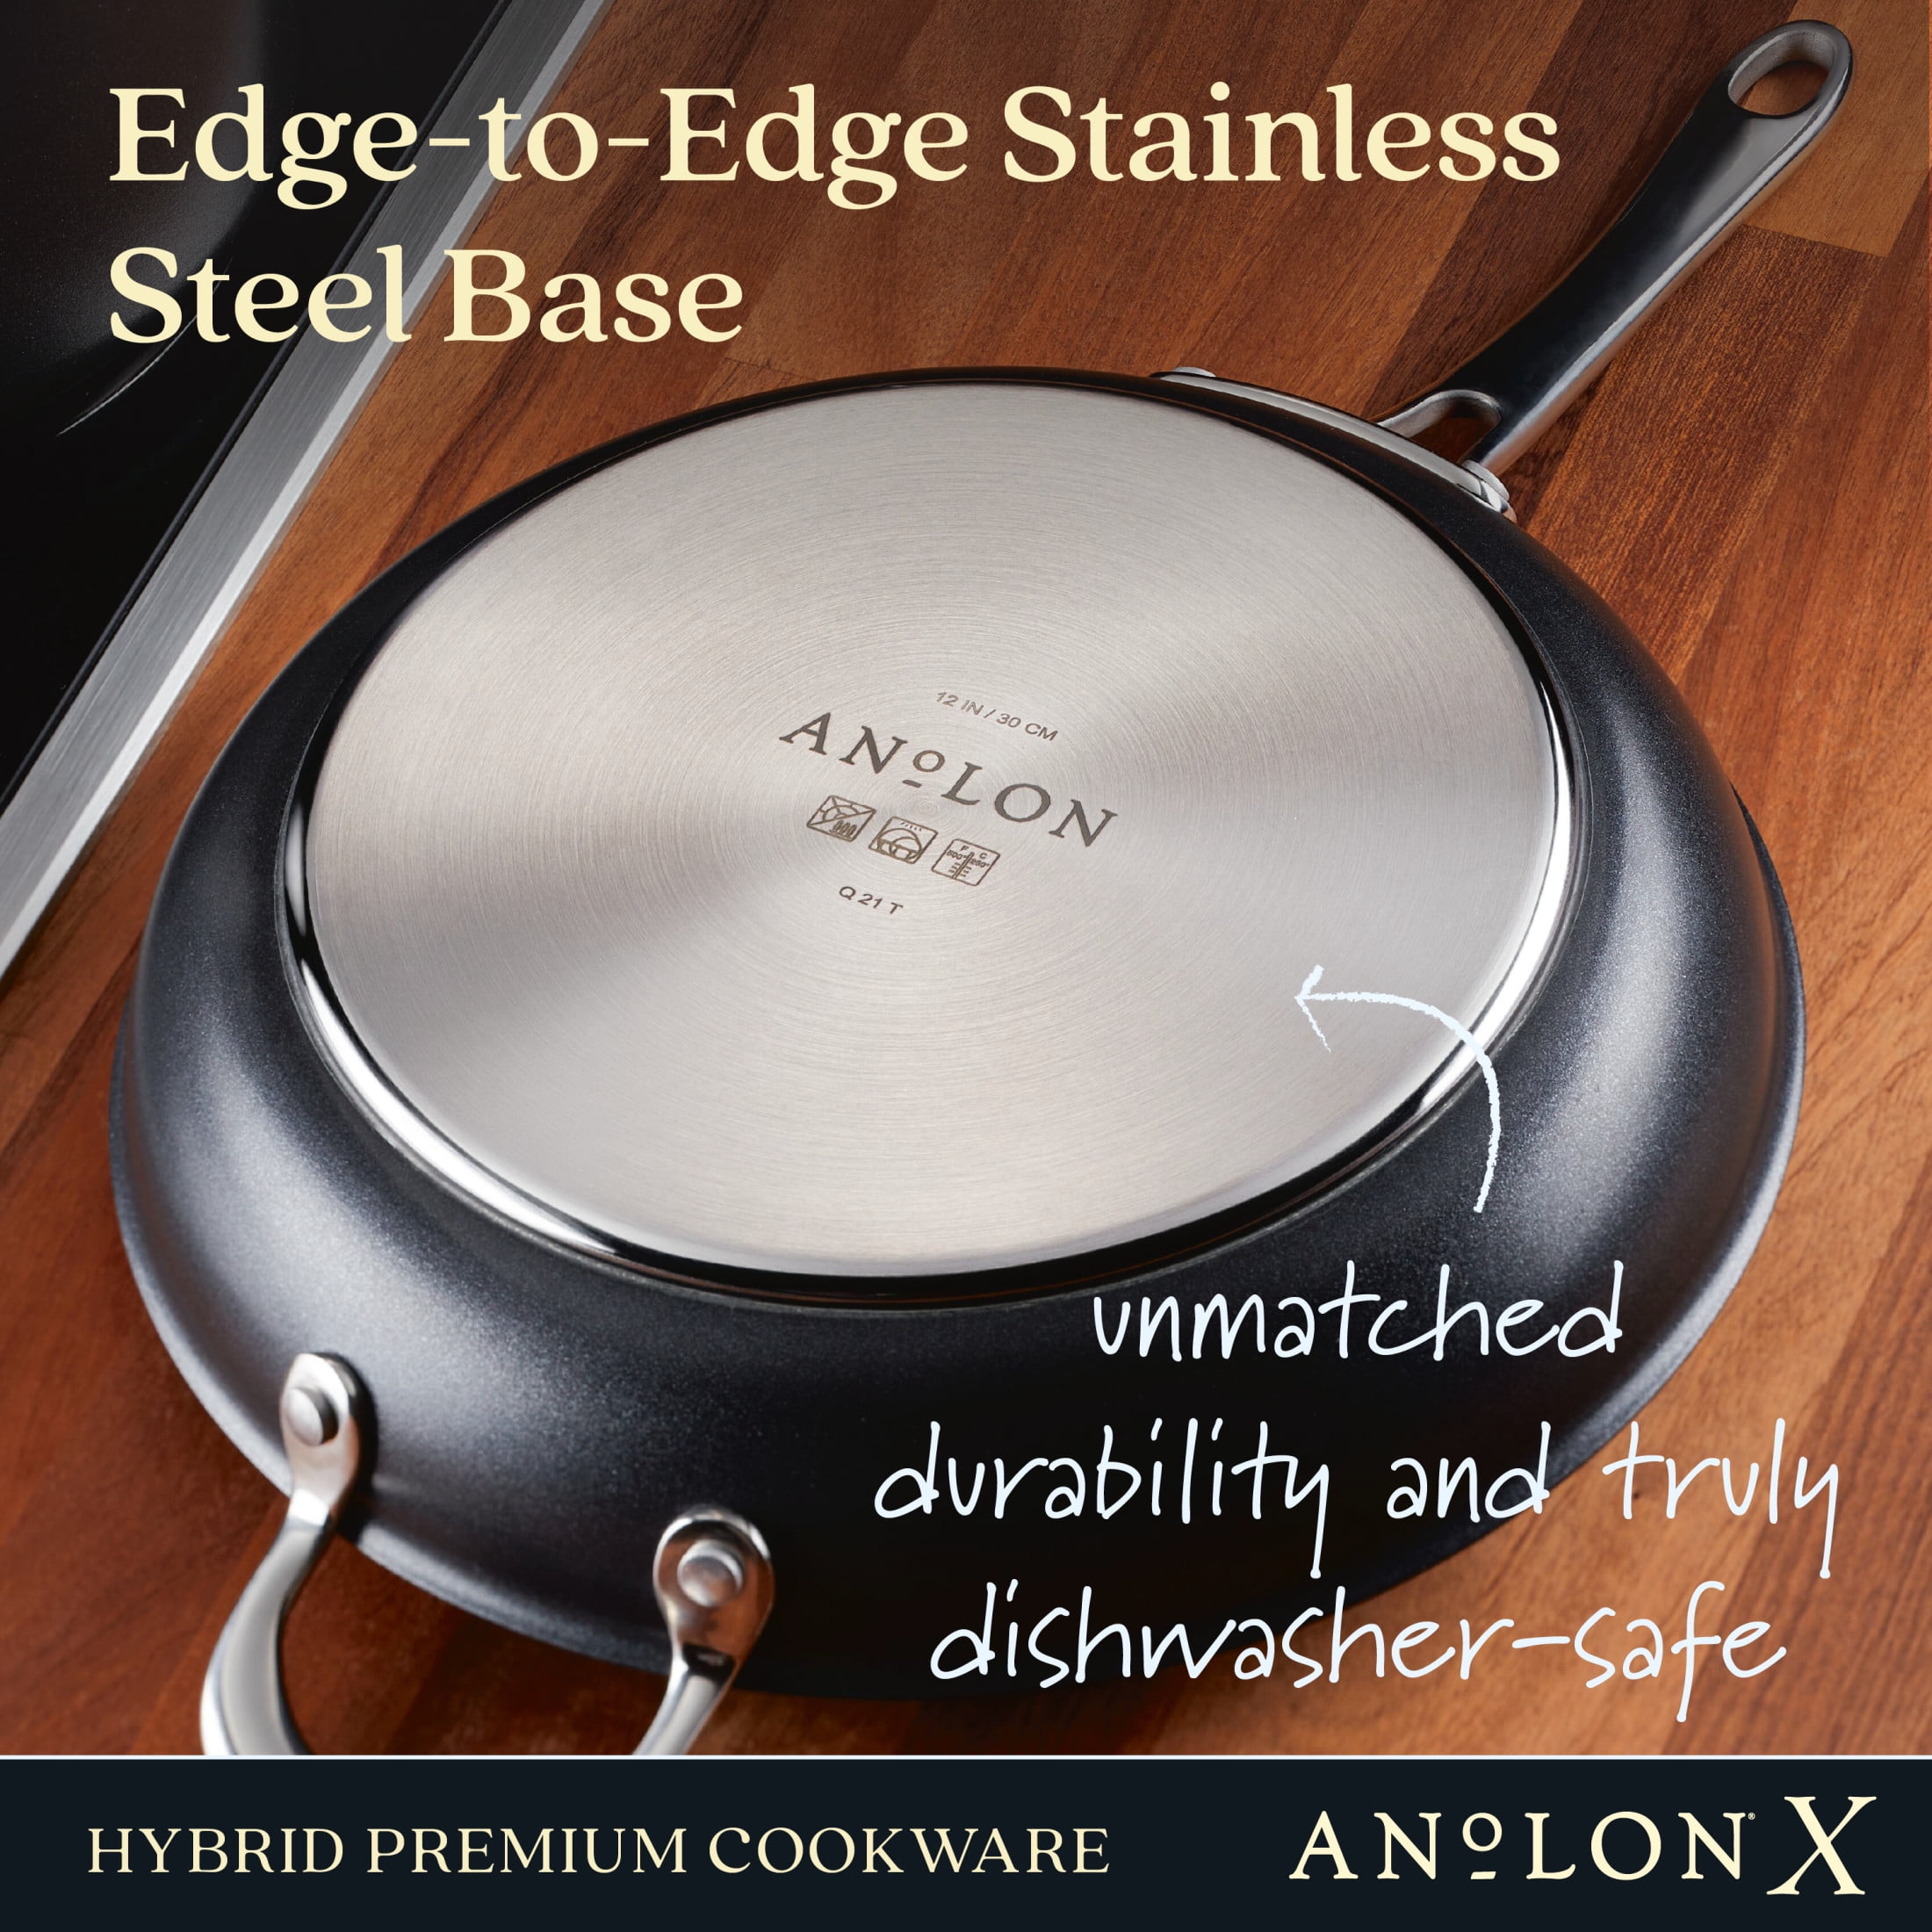 Anolon x SearTech Aluminum Nonstick Frying Pan with Helper Handle, 12-Inch, Super Dark Gray